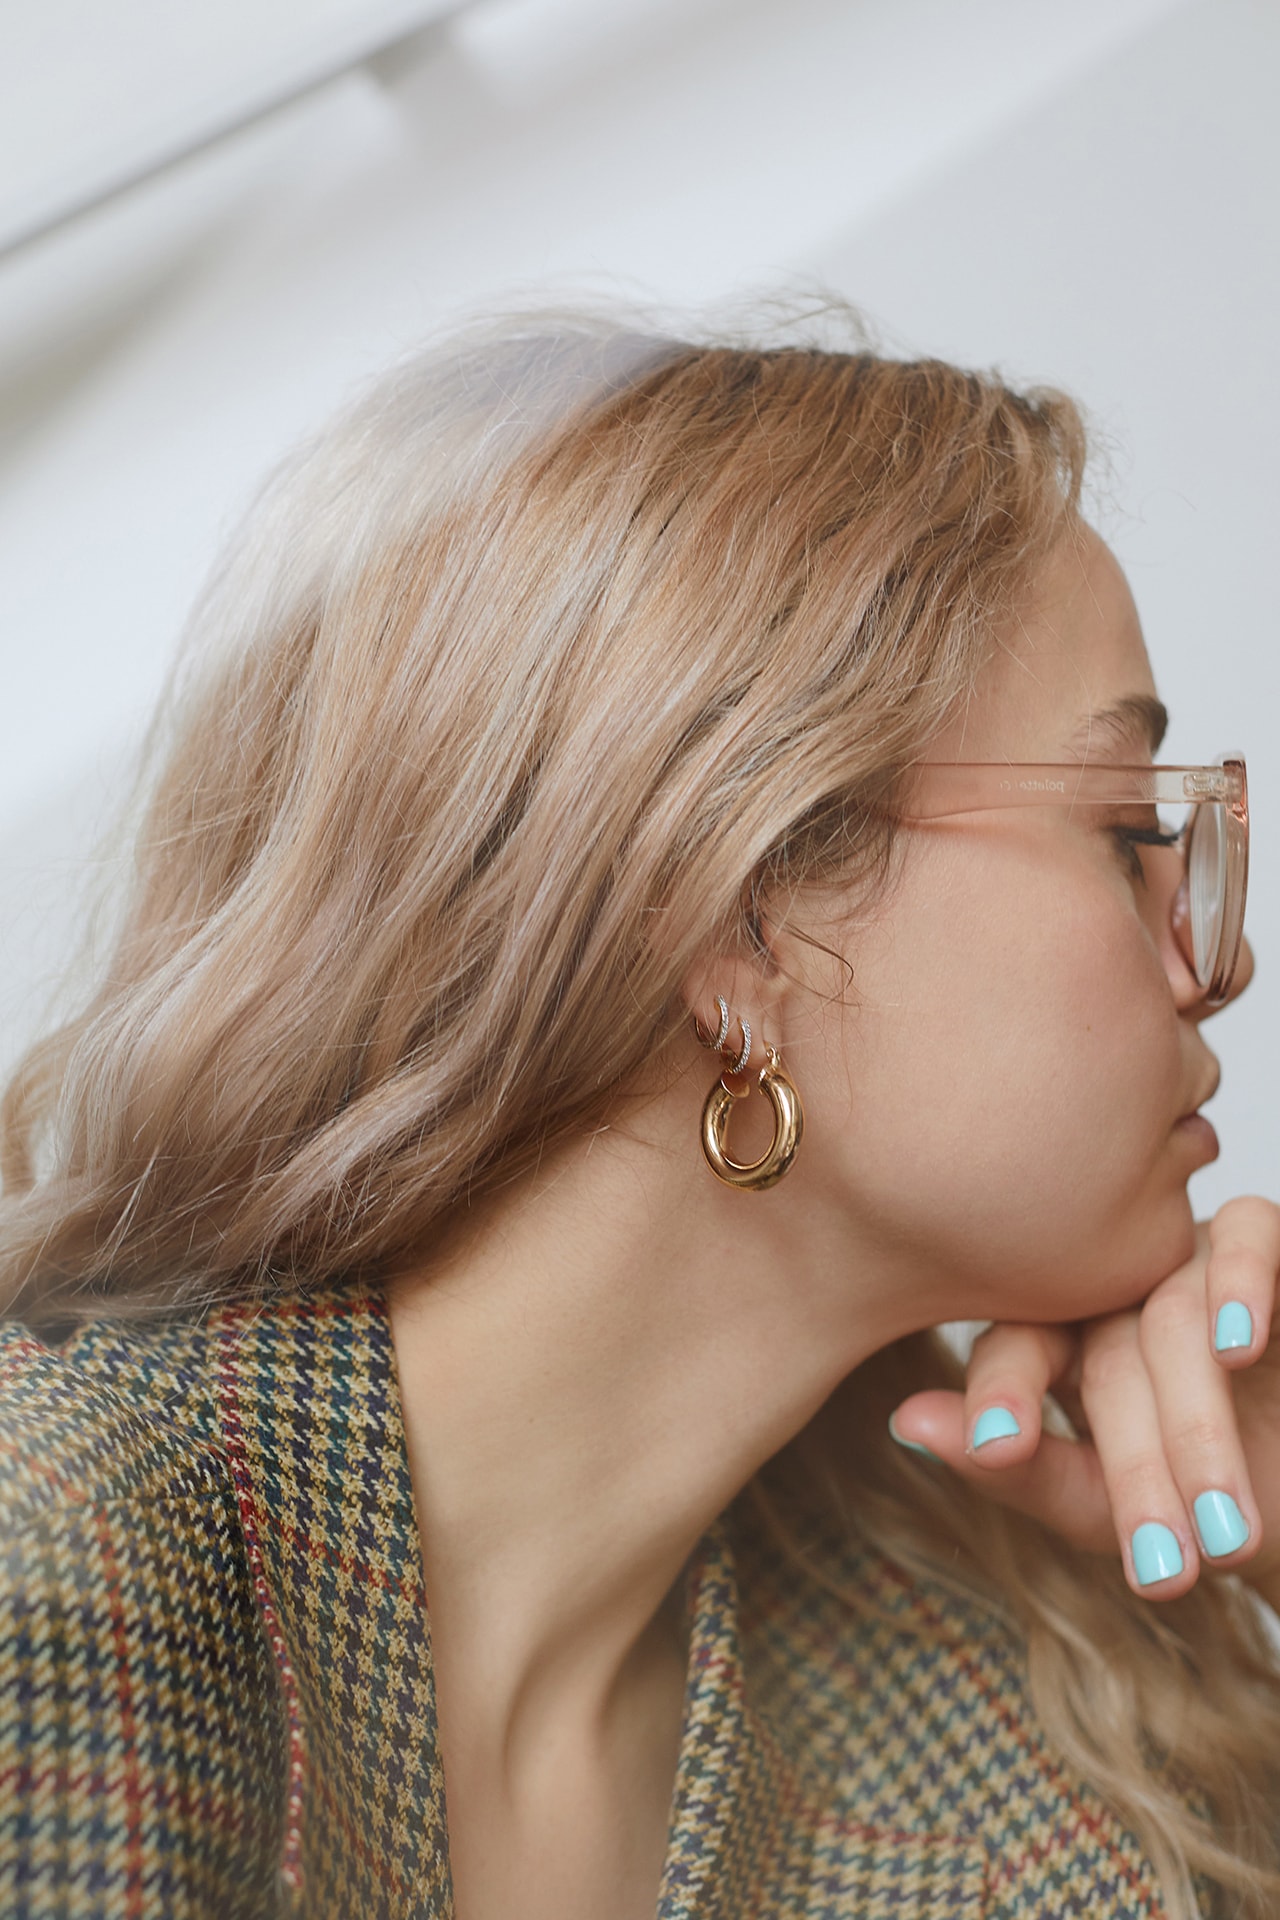 stephanie broek blonde hair glasses blue nail polish blazer earrings